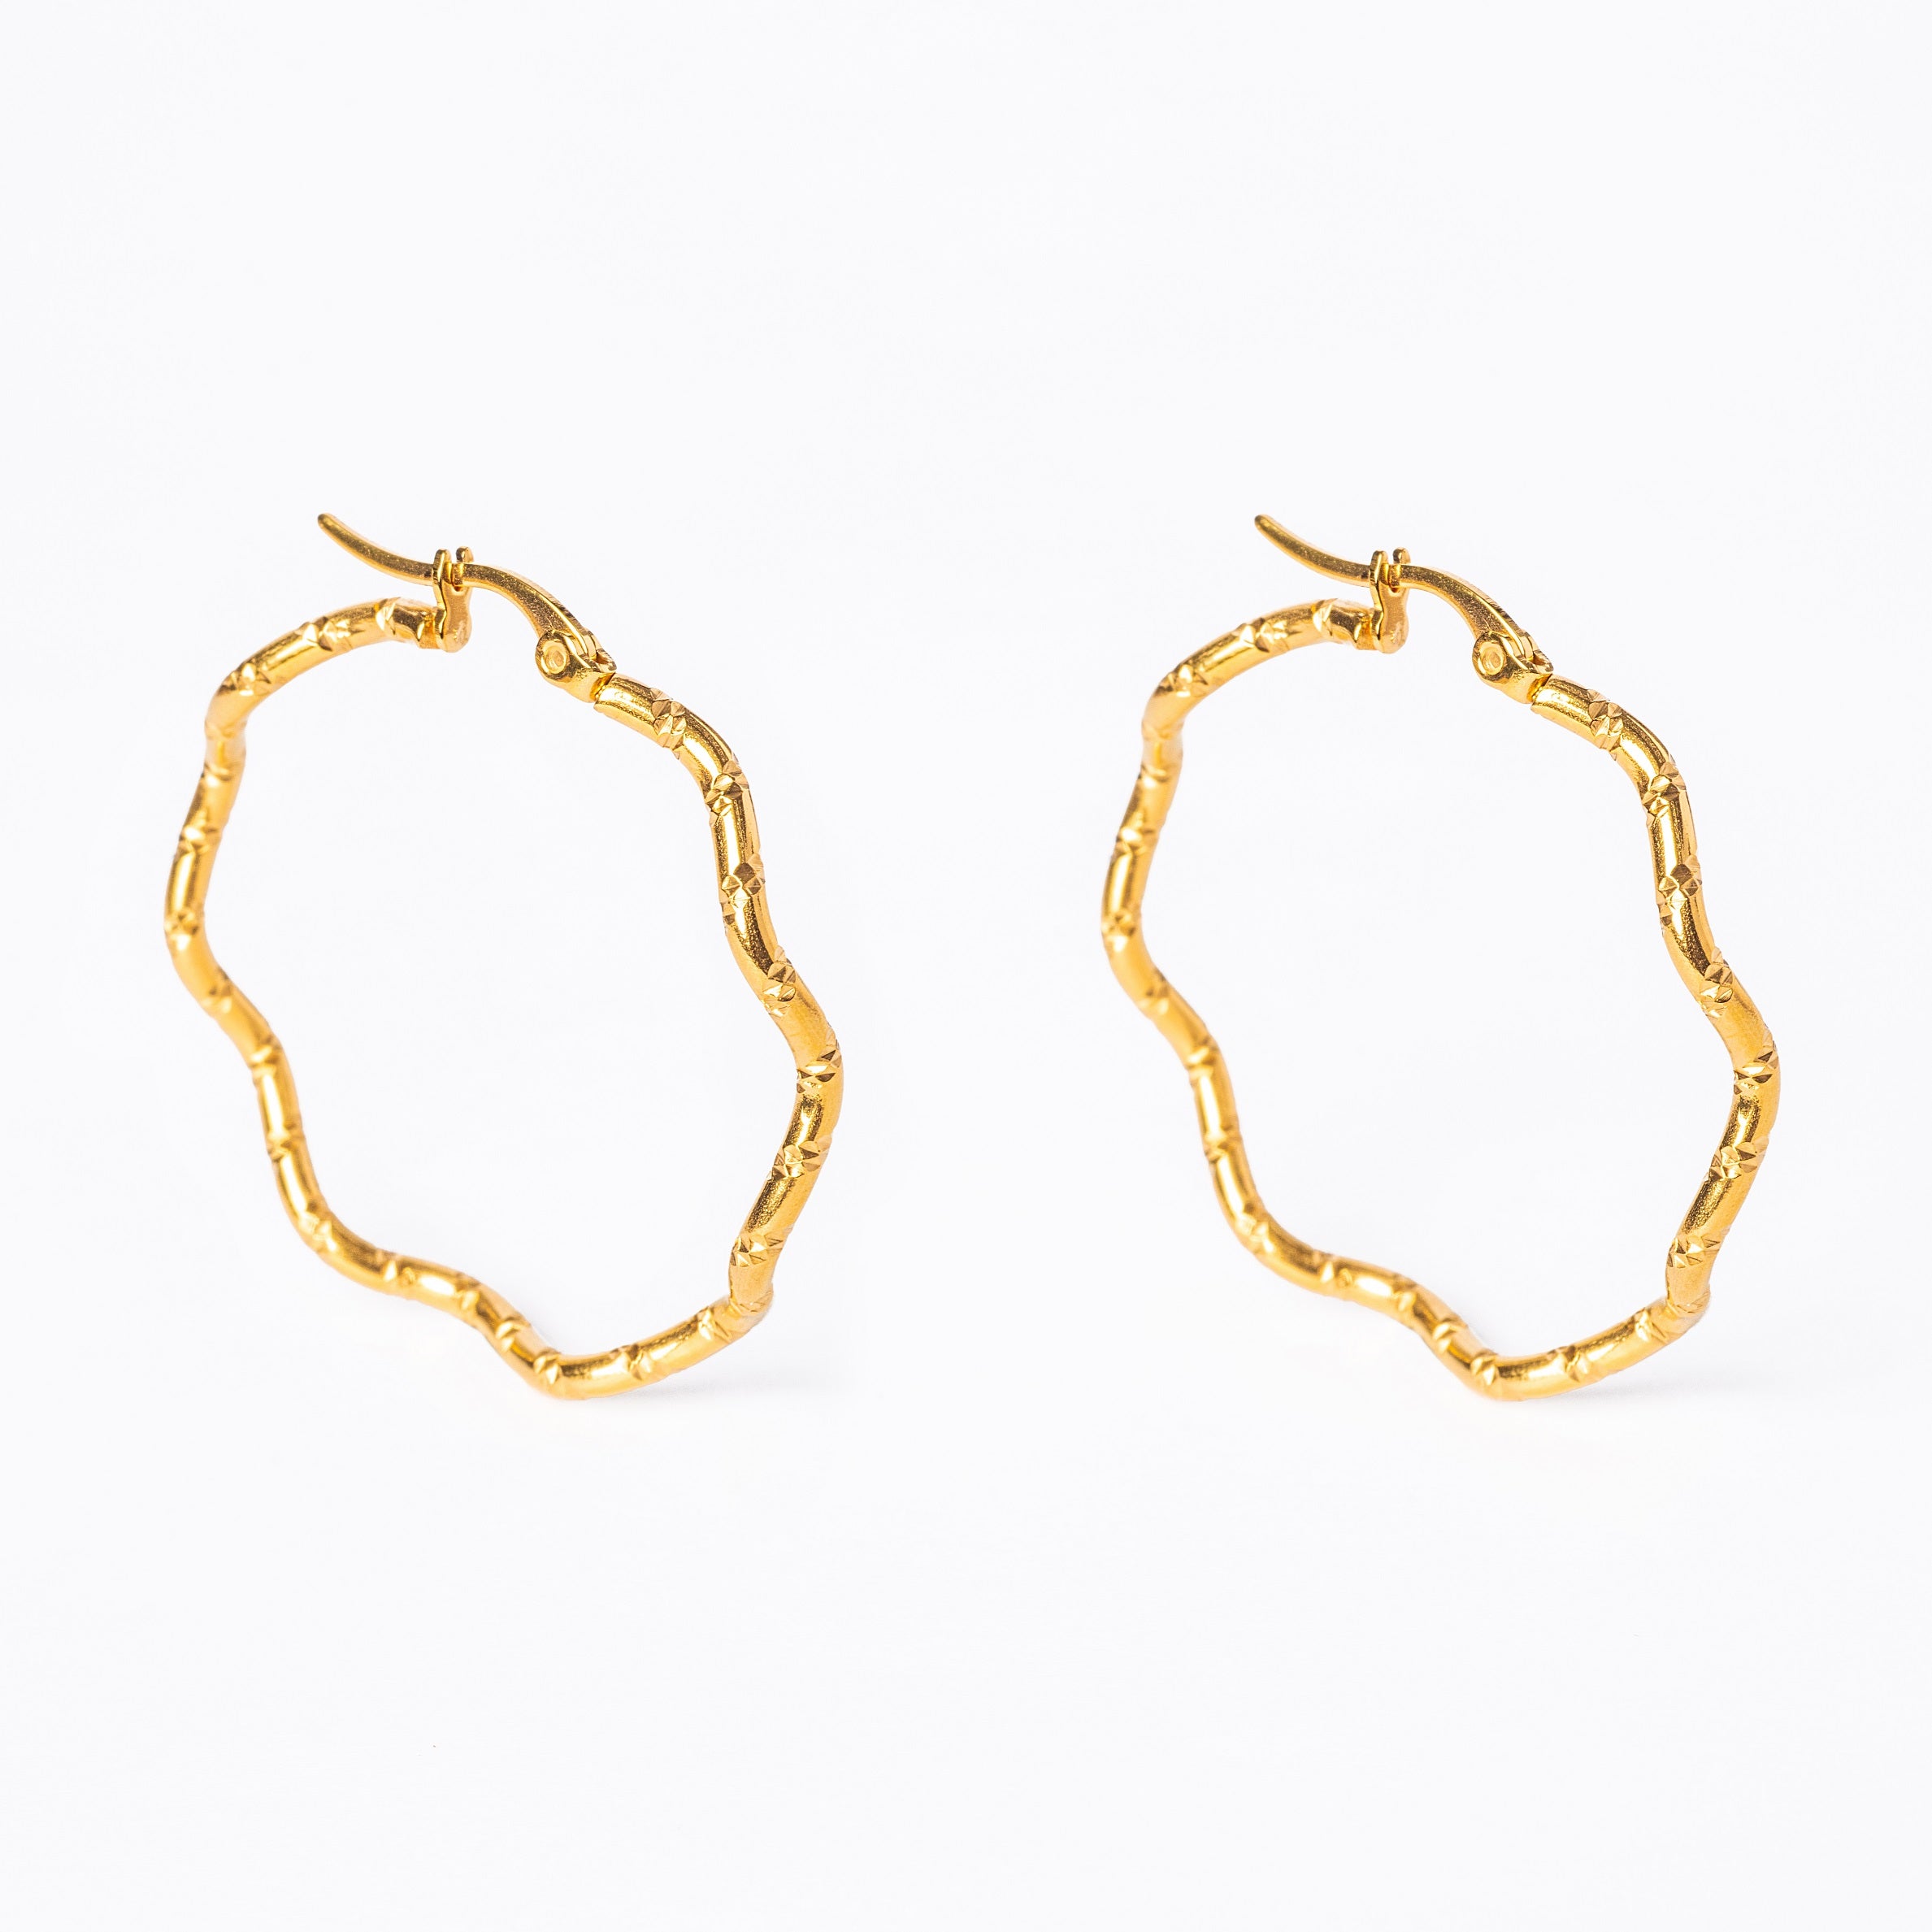 Mary Gold Earrings